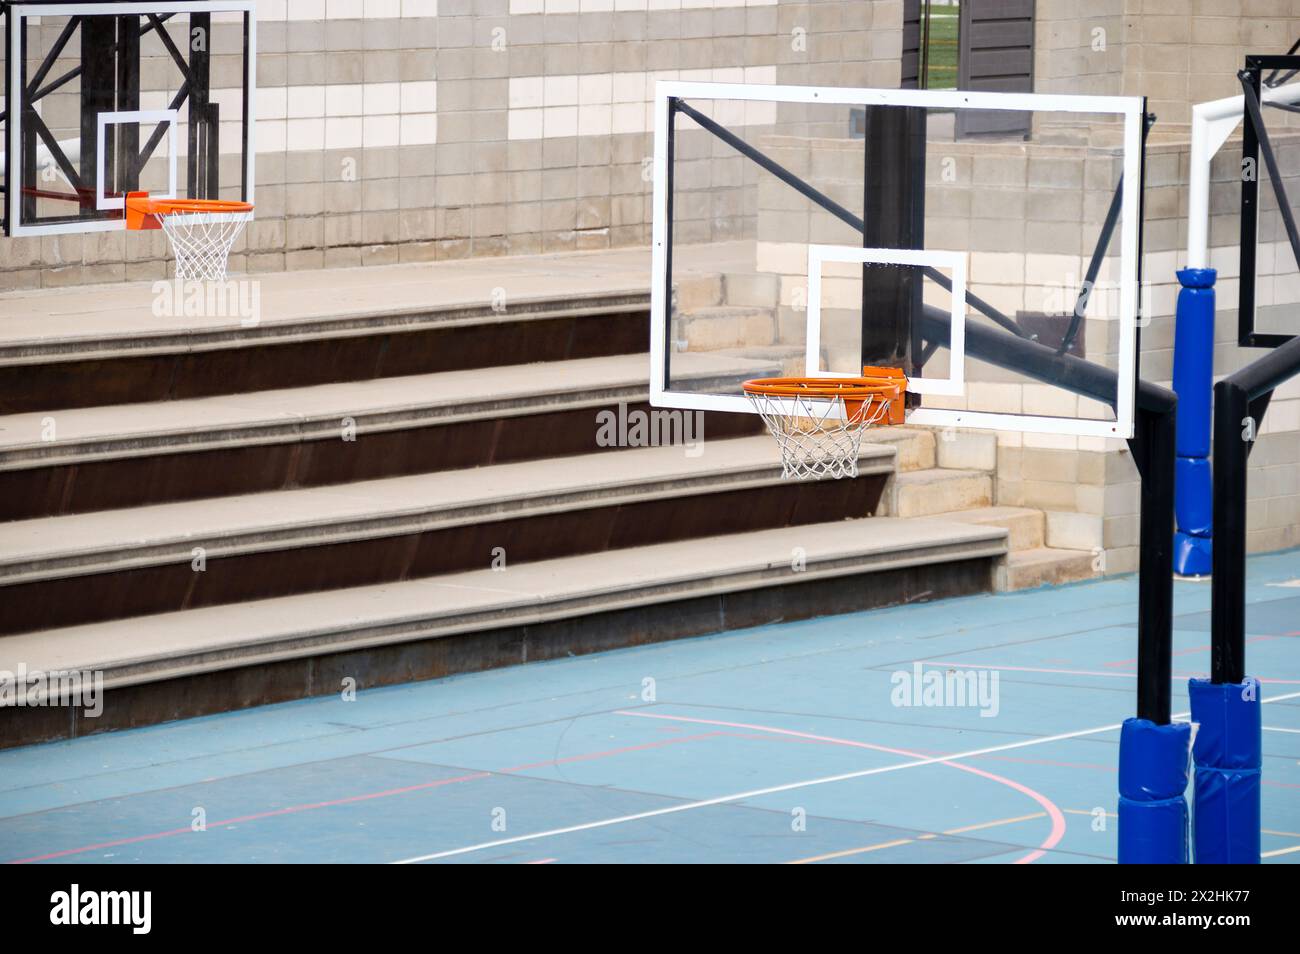 Closeup shot of a basketball hoop on a sports court Stock Photo